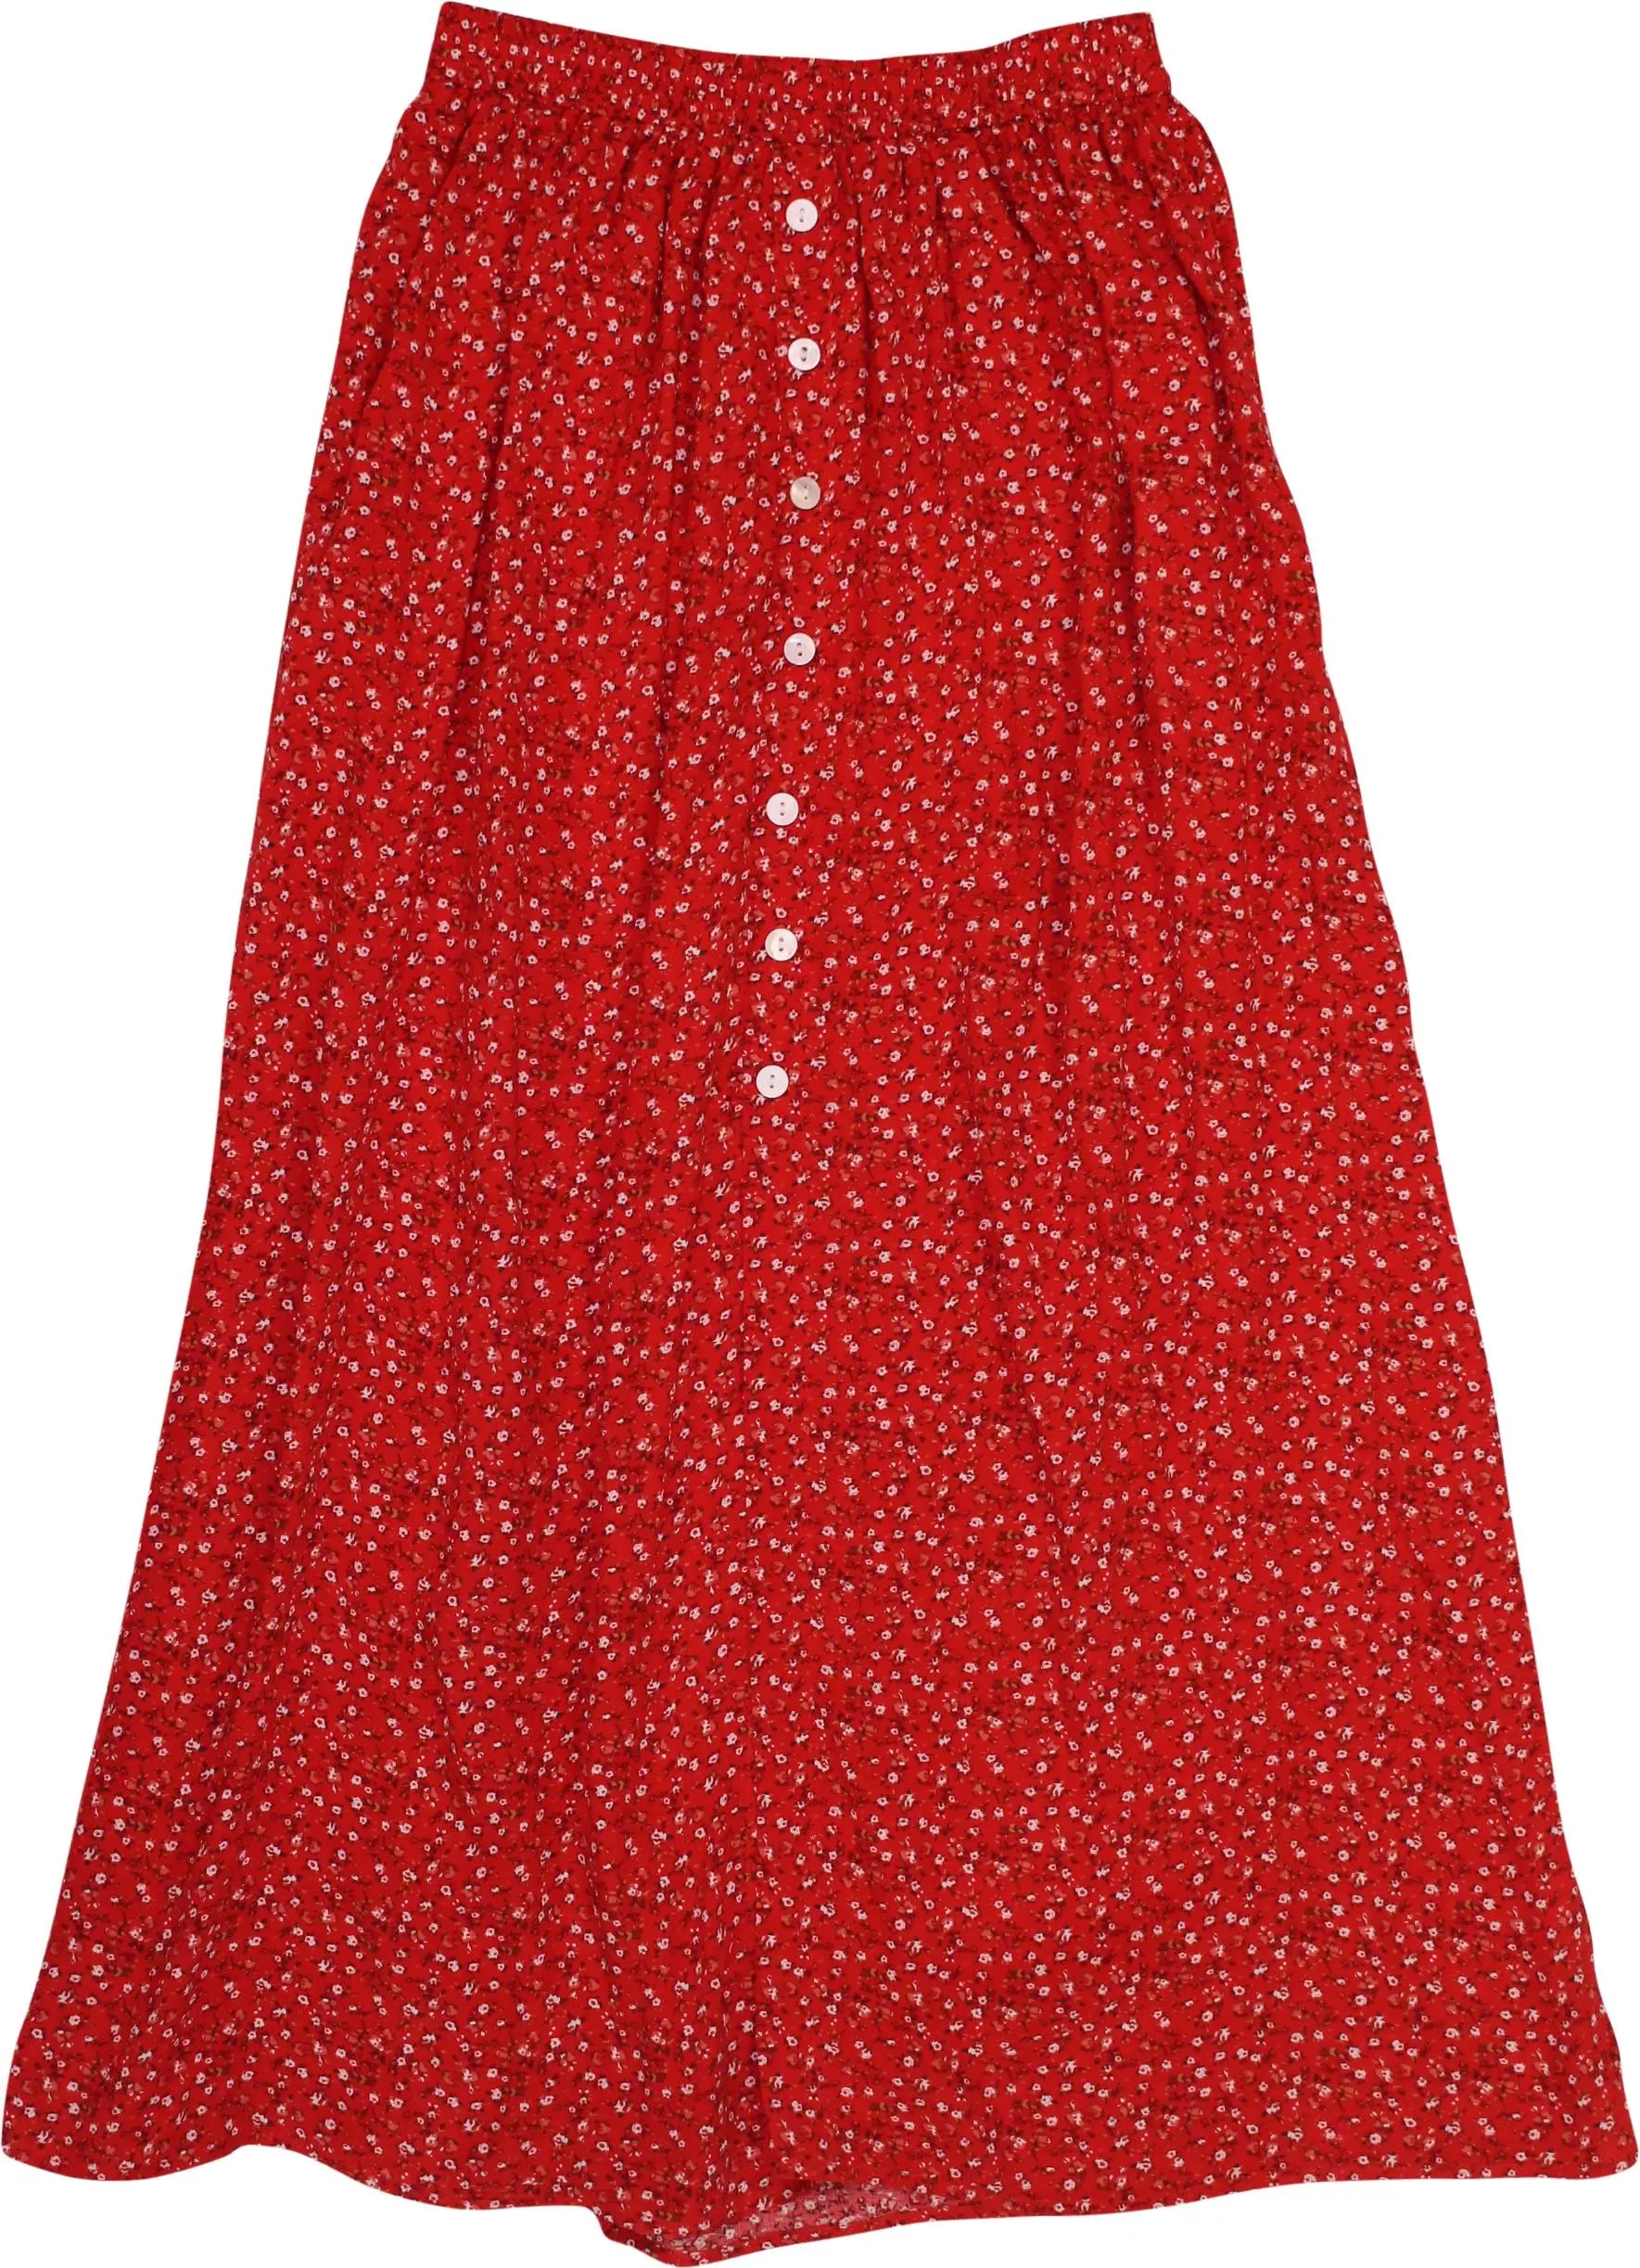 Vintage Dressing - Skirt- ThriftTale.com - Vintage and second handclothing